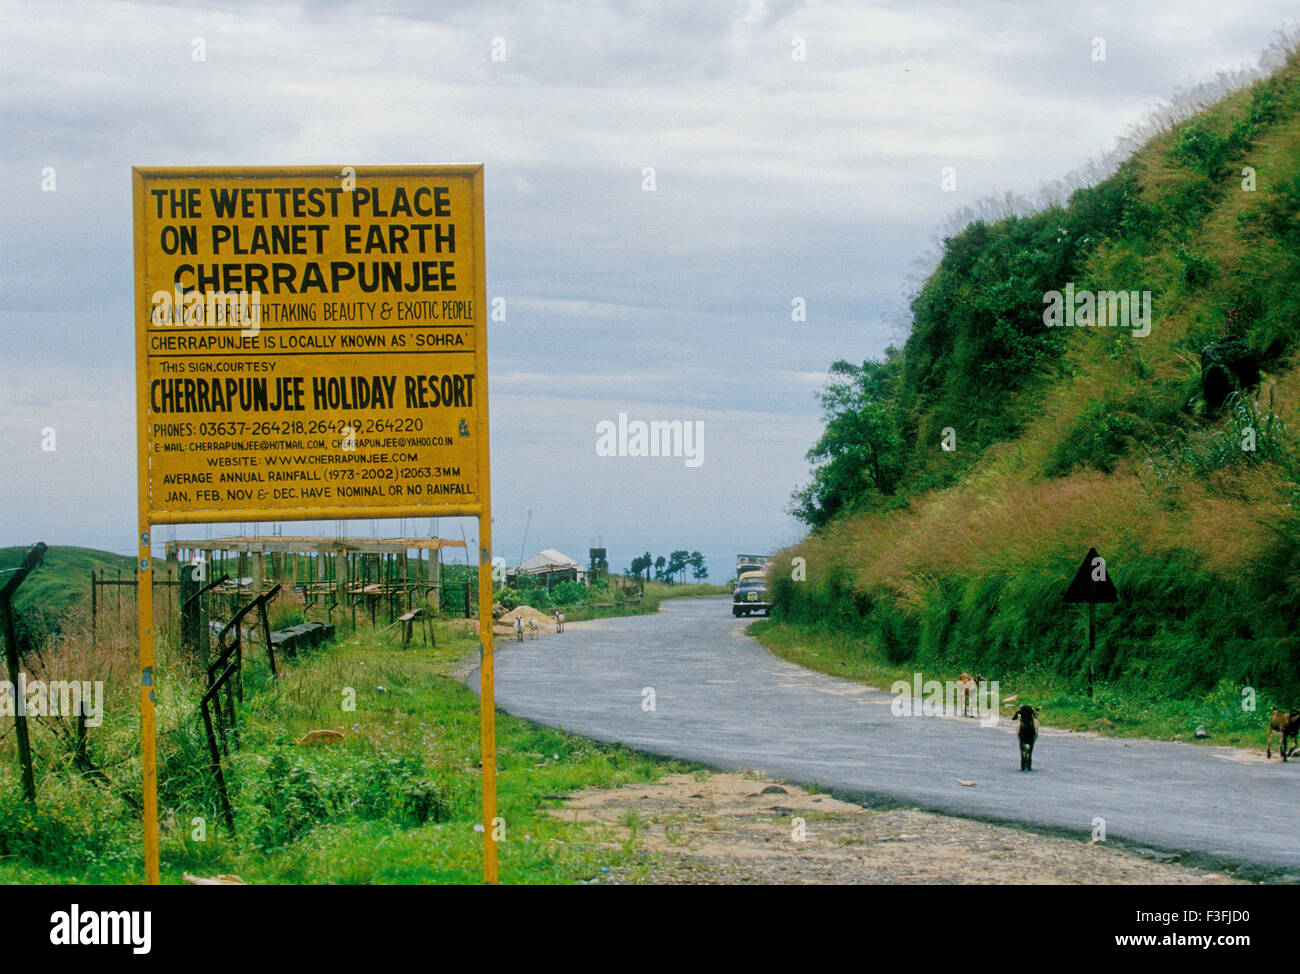 Cherrapunji ; Cherrapunjee ; cartello con il nome del luogo più umido del mondo sulla terra del pianeta ; Sohra ; Churra ; Shillong ; East Khasi Hills ; Meghalaya ; India ; Asia Foto Stock